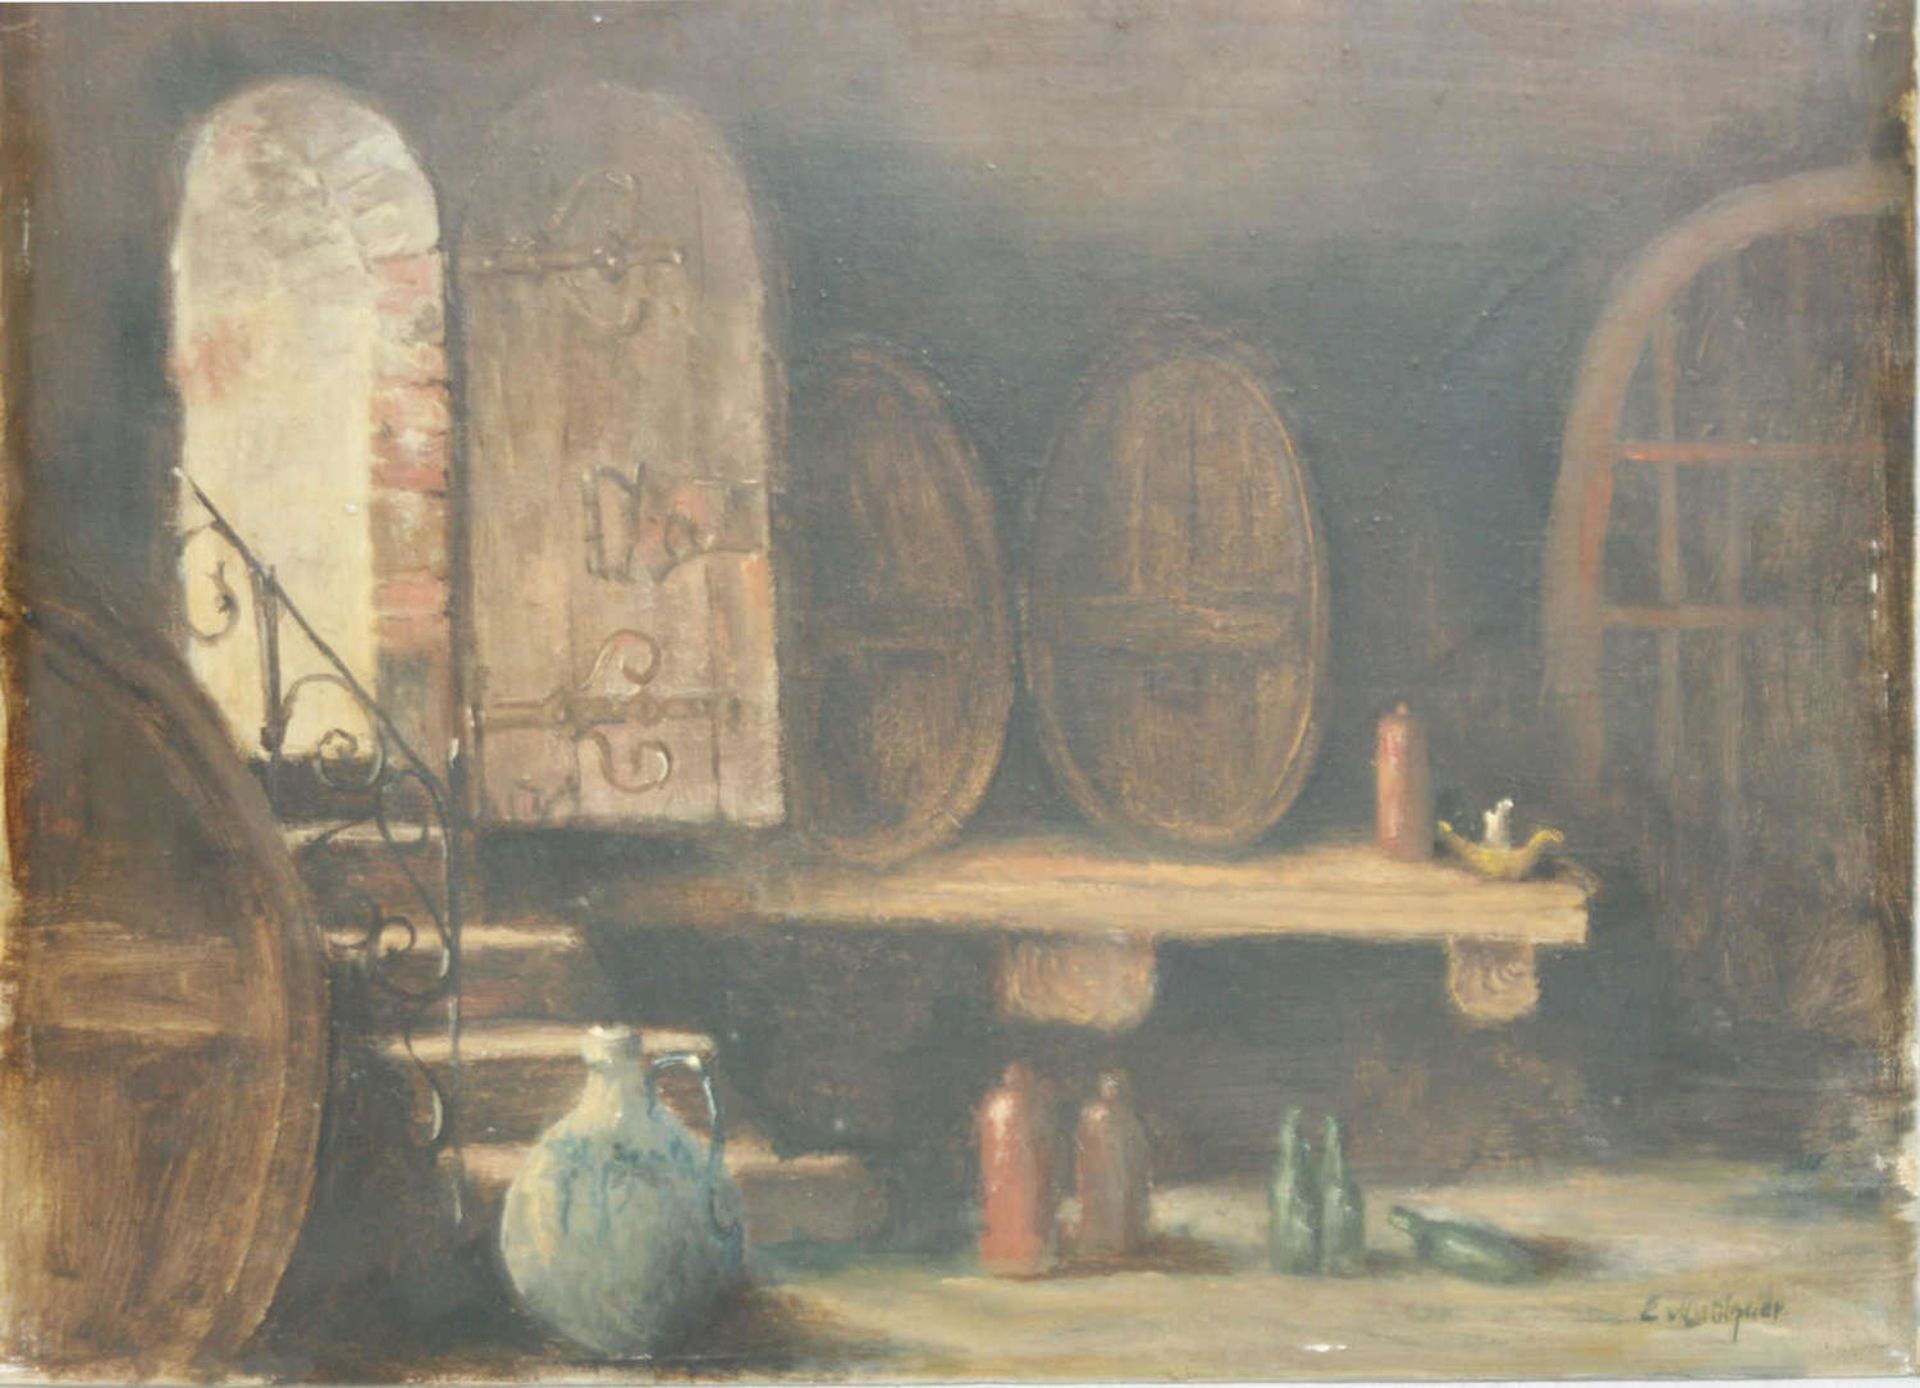 Eduard v. Gutzner (1846-1925), Ölgemälde auf Leinwand "Weinkeller", rechts unten Signatur E.v.